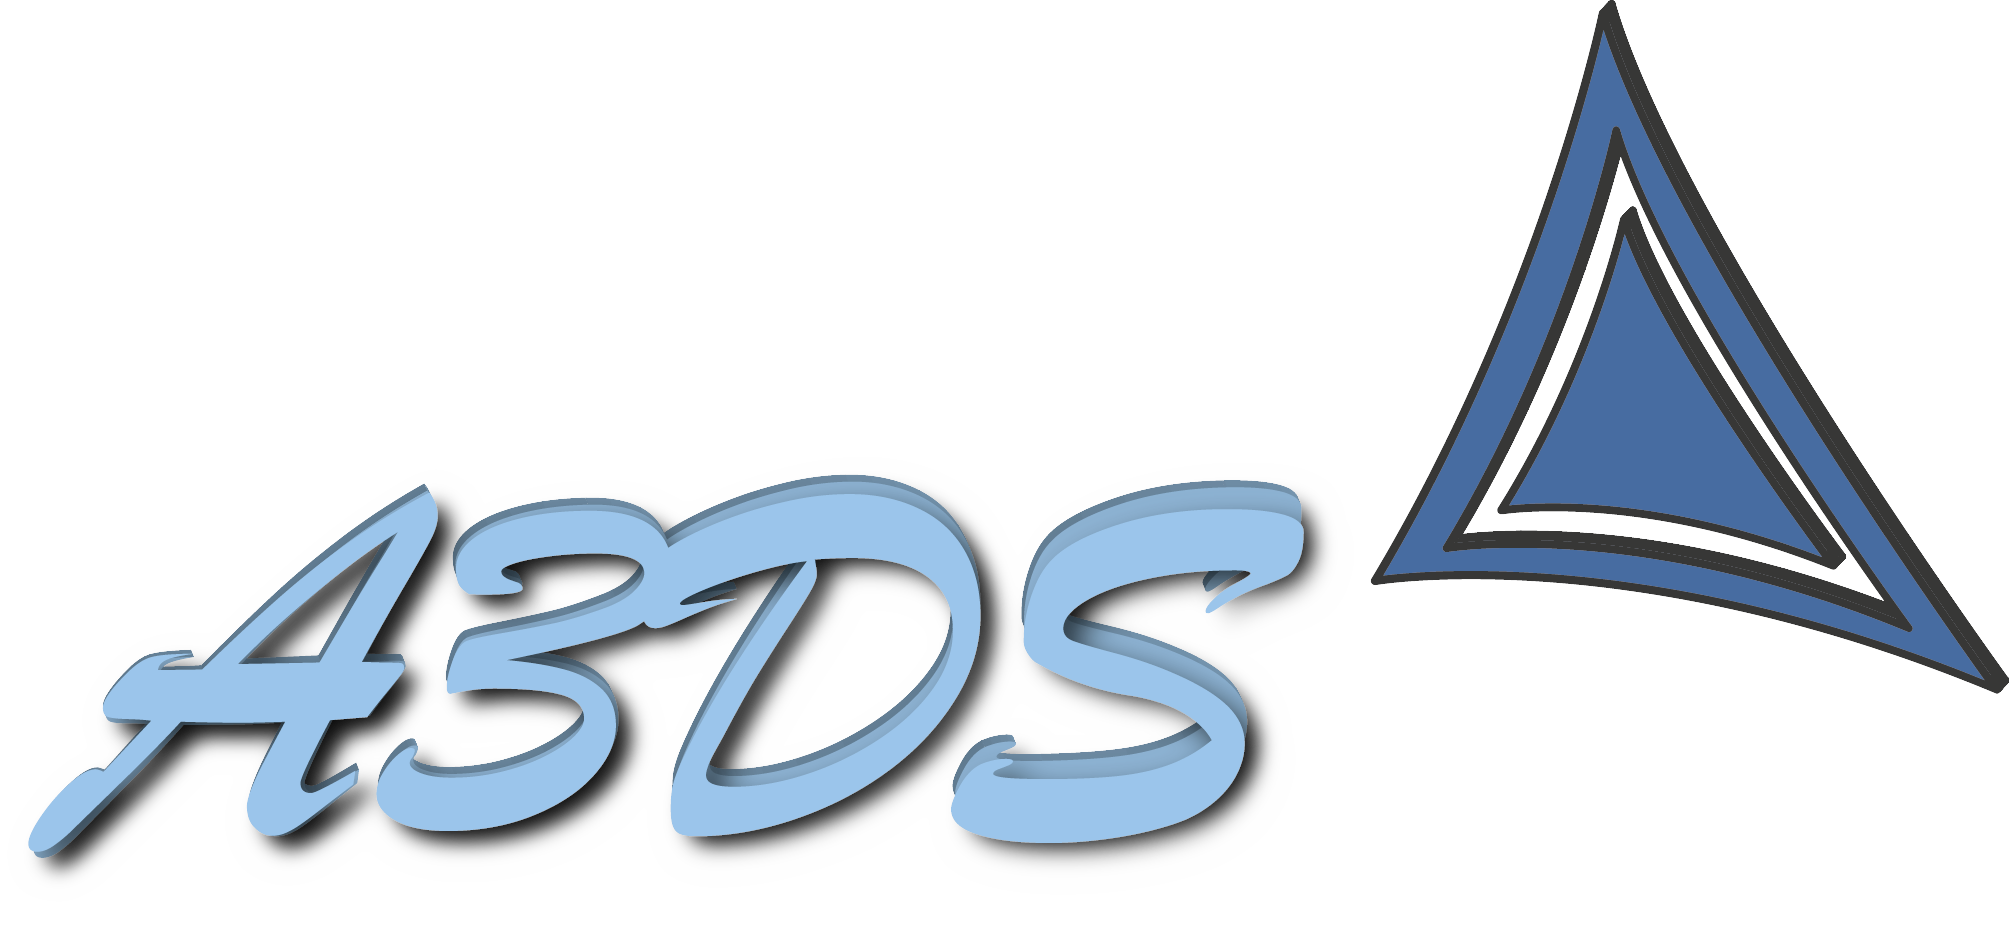 A3ds advanced 3D solutions